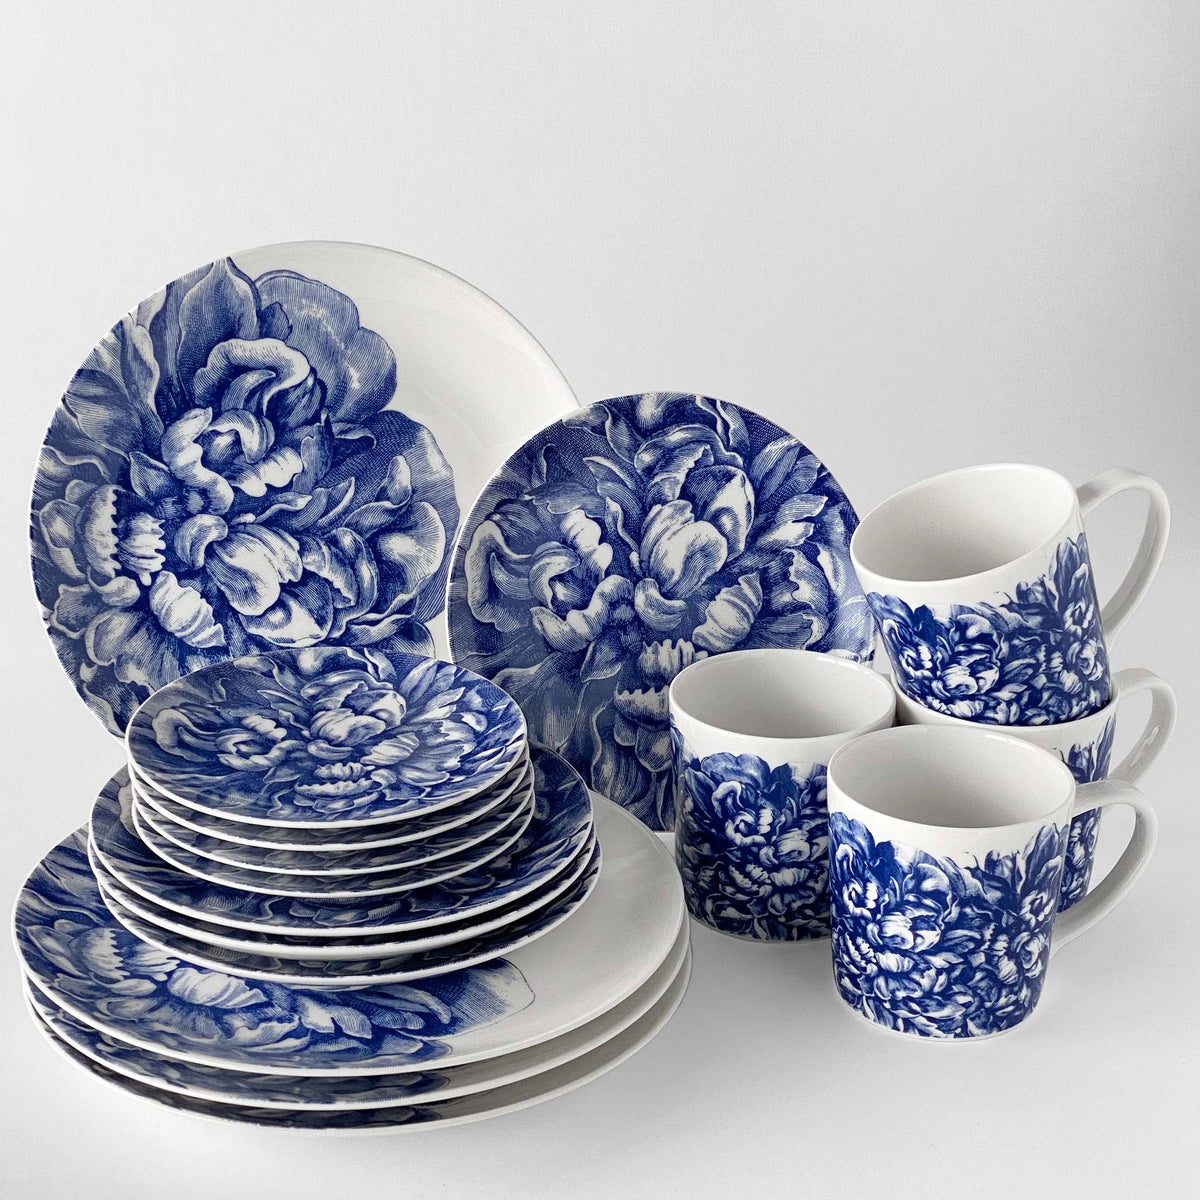 A set of Caskata Artisanal Home&#39;s blue Peony Coupe Salad Plates arranged on a white background.